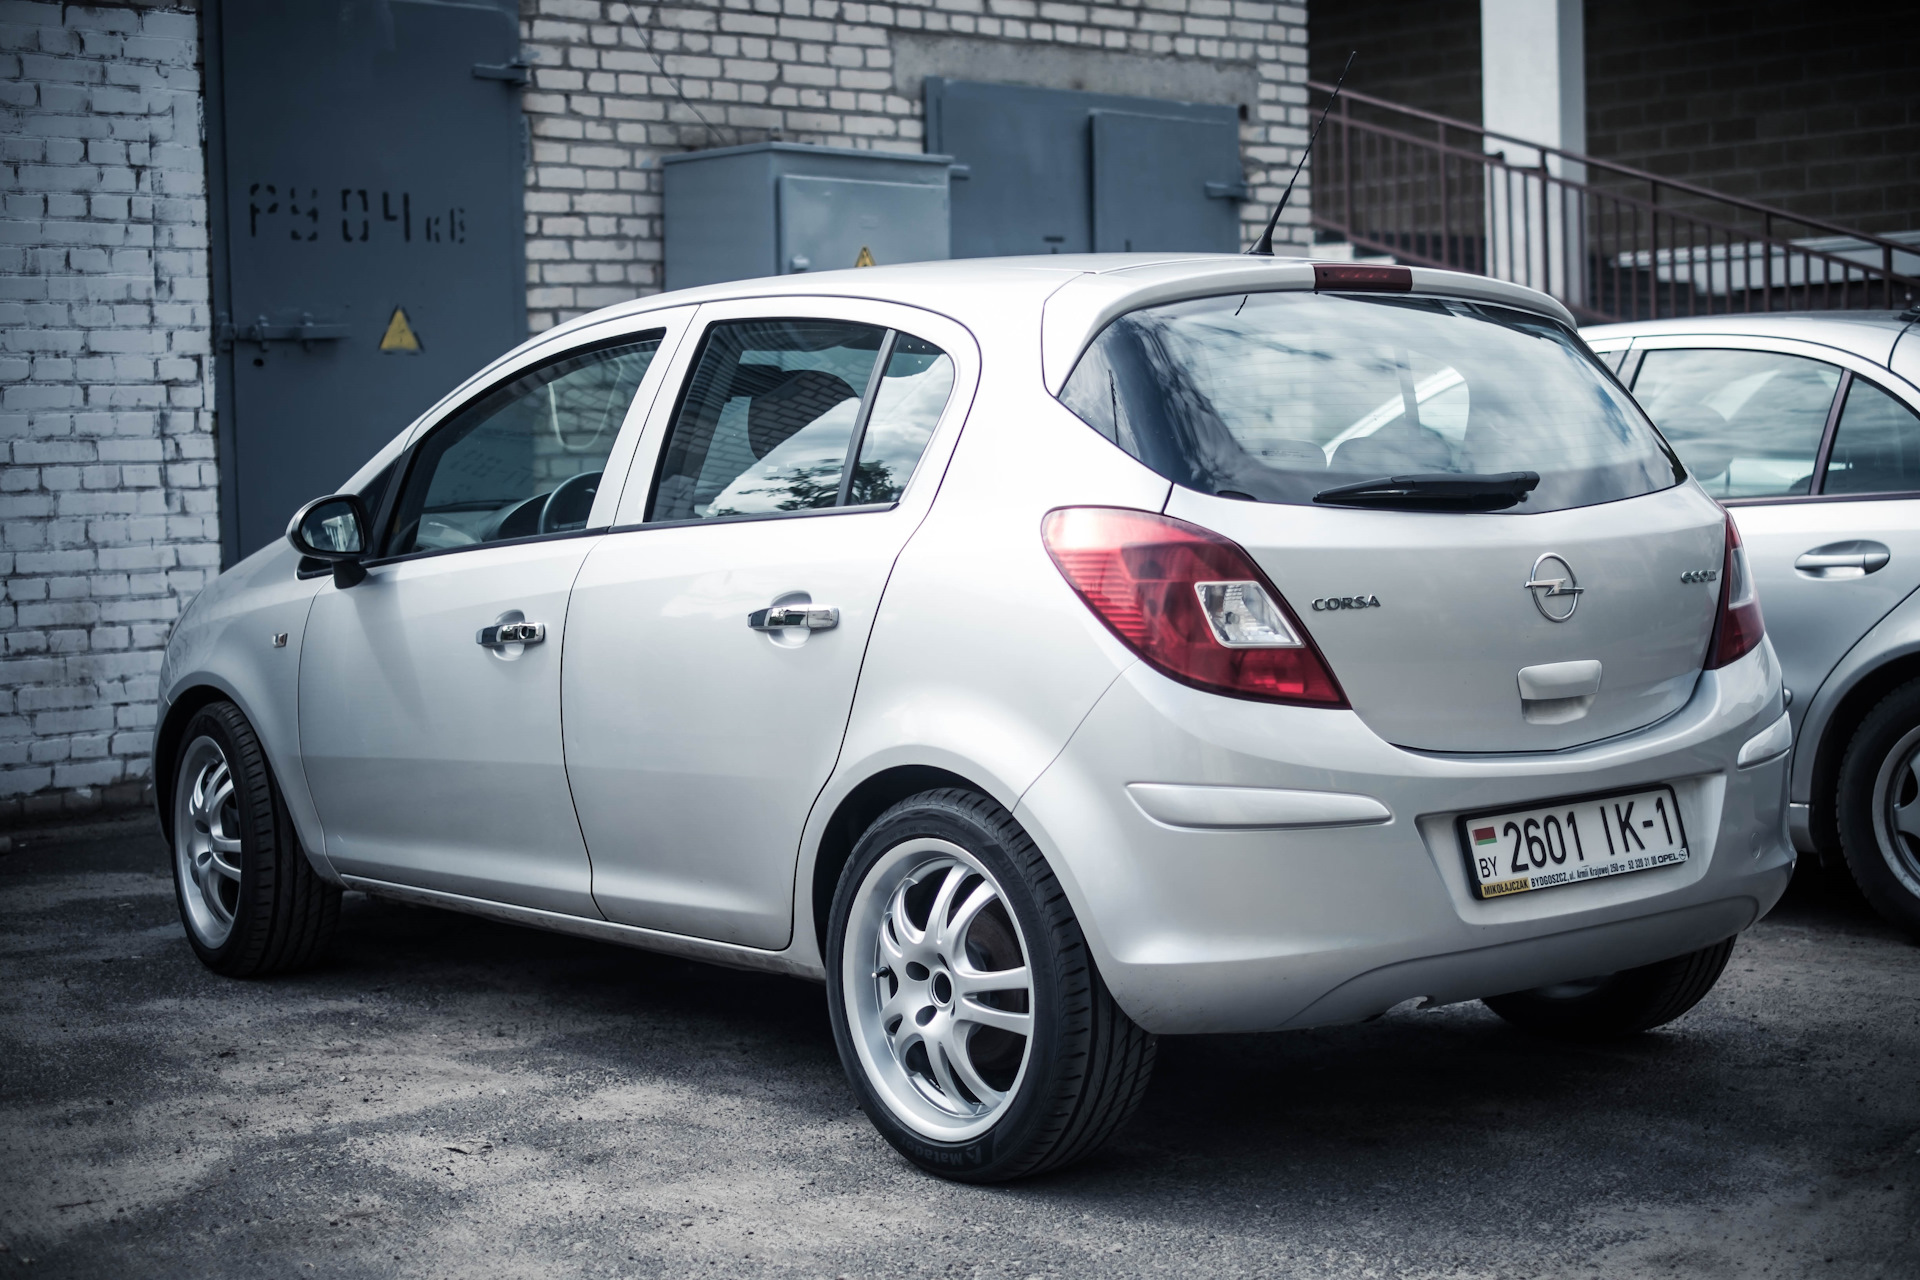 Opel corsa шины. Опель Корса 1.2. Опель Корса д. Опель Корса серебристый 5 дверей. Опель Корса д 1.2 размер колес.